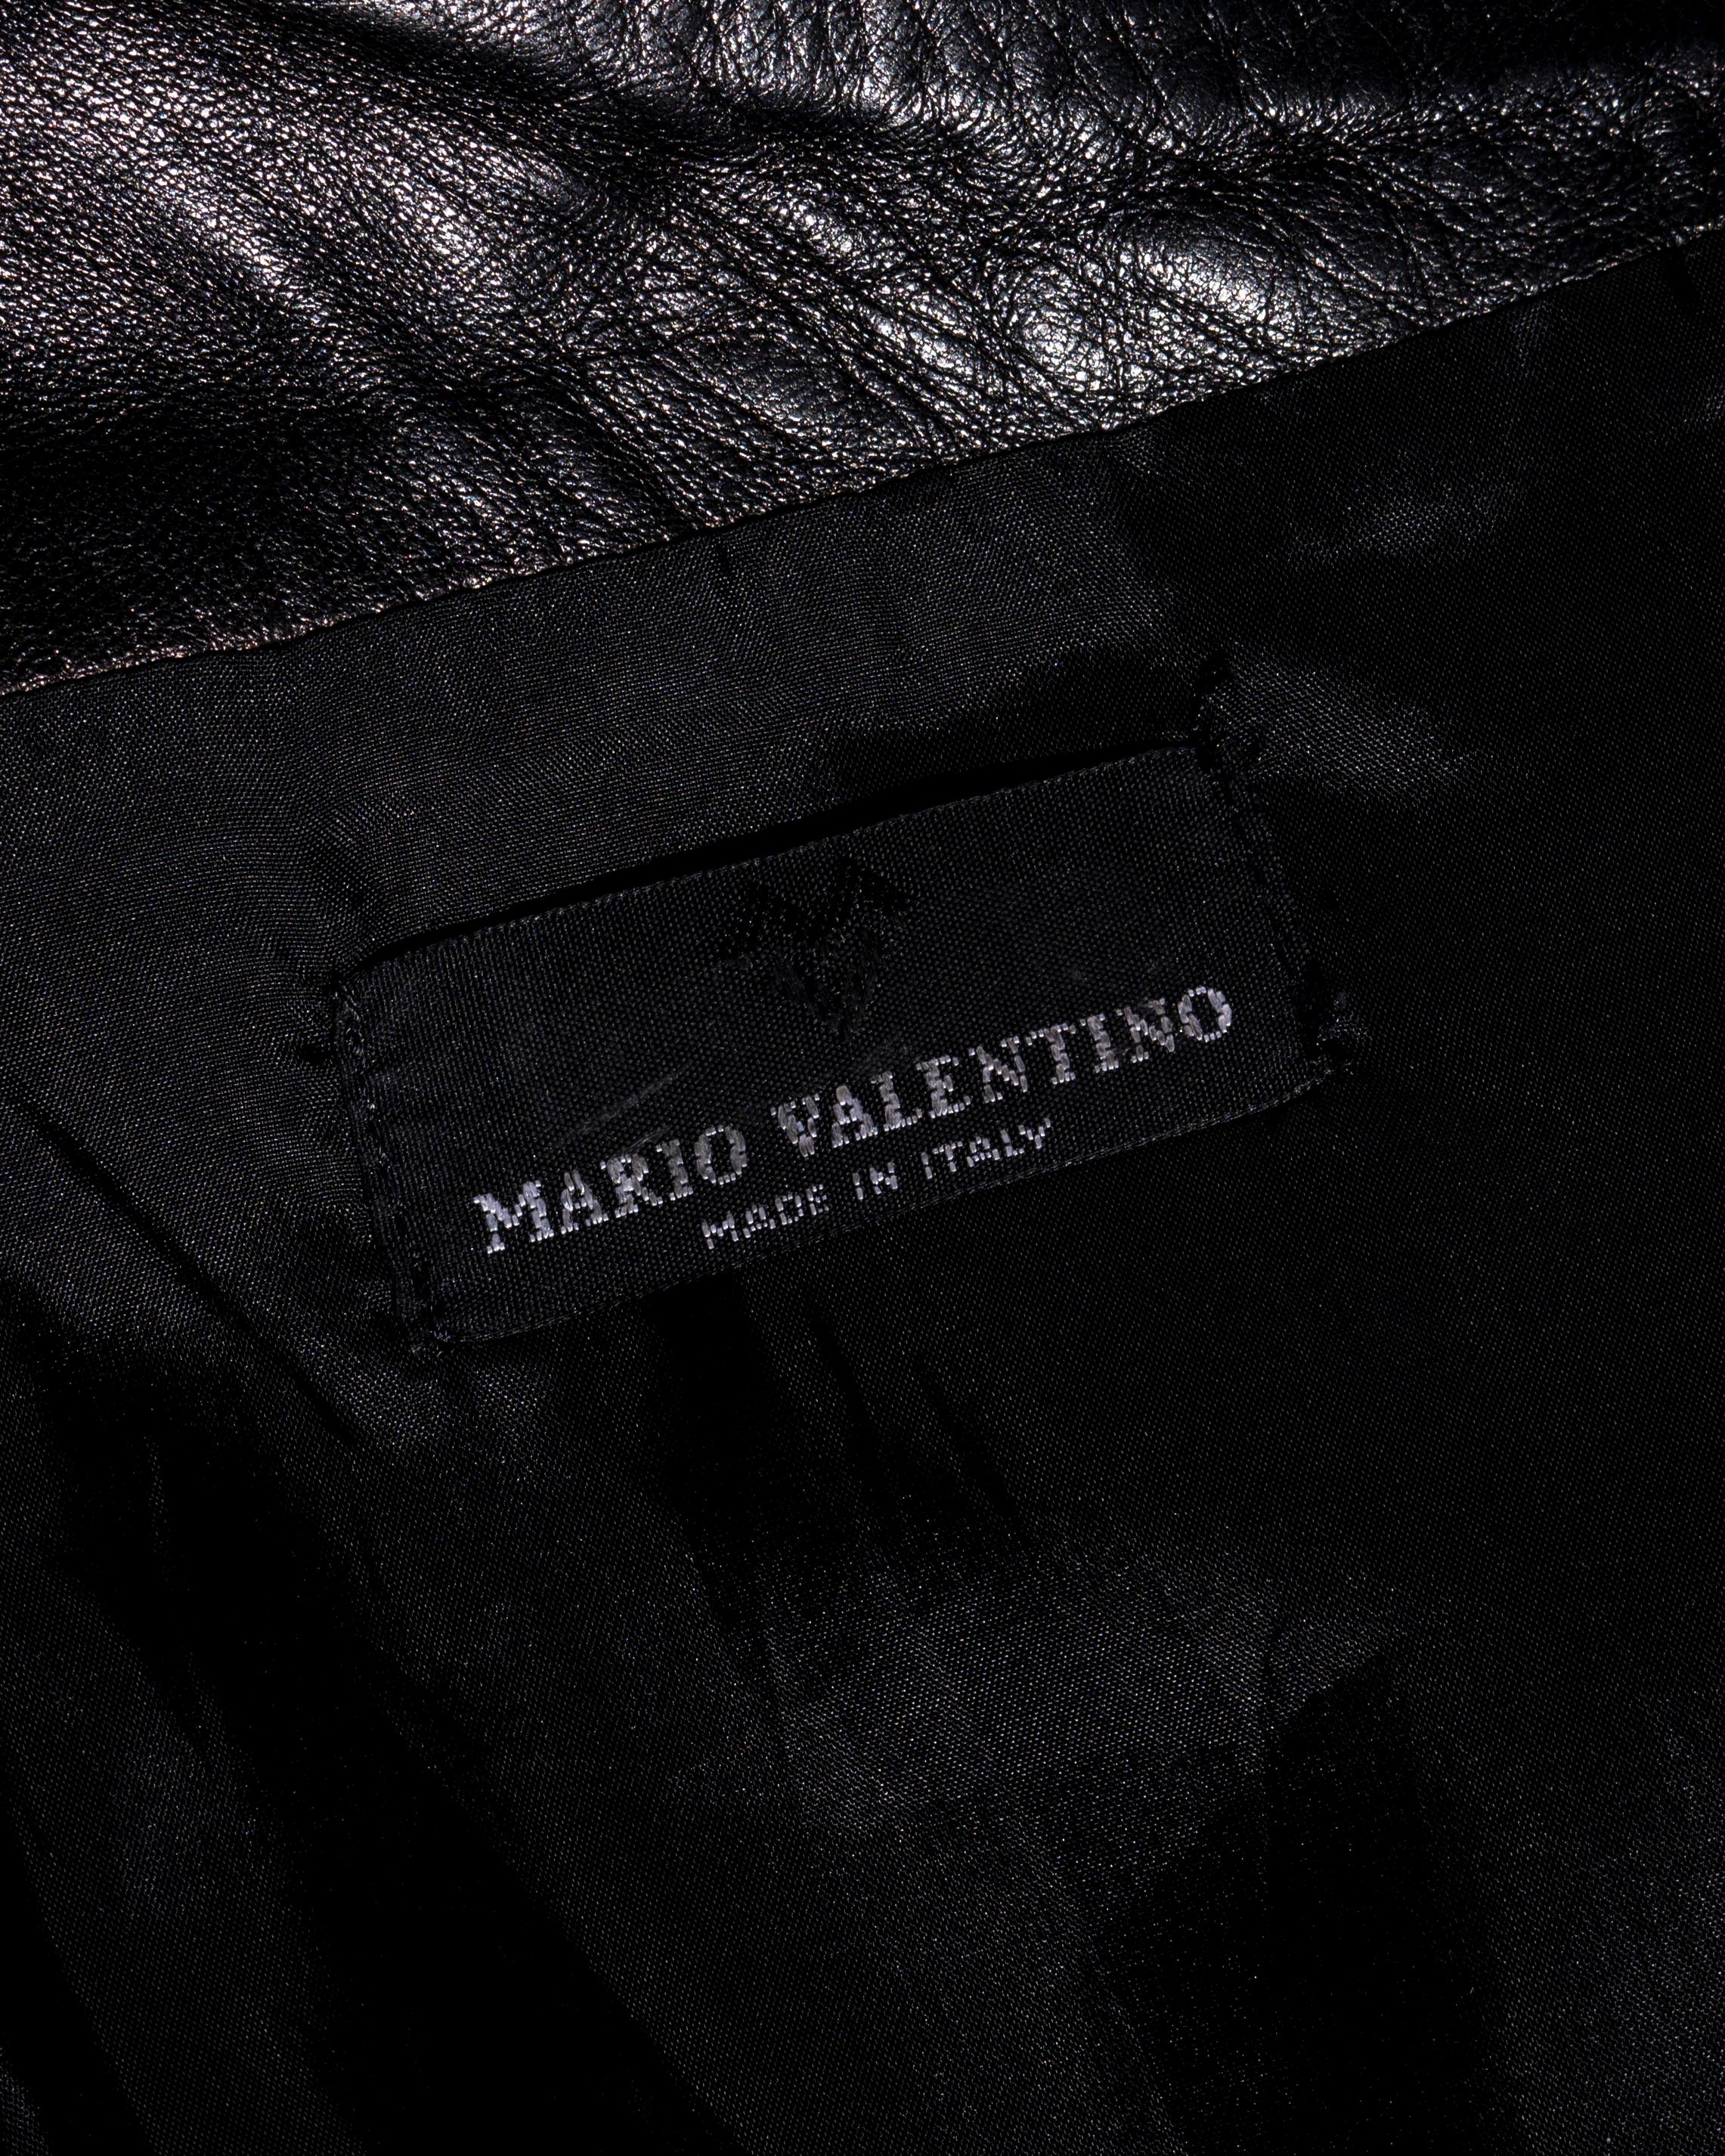 Mario Valentino black lambskin leather open back full-length dress, fw 1999 4